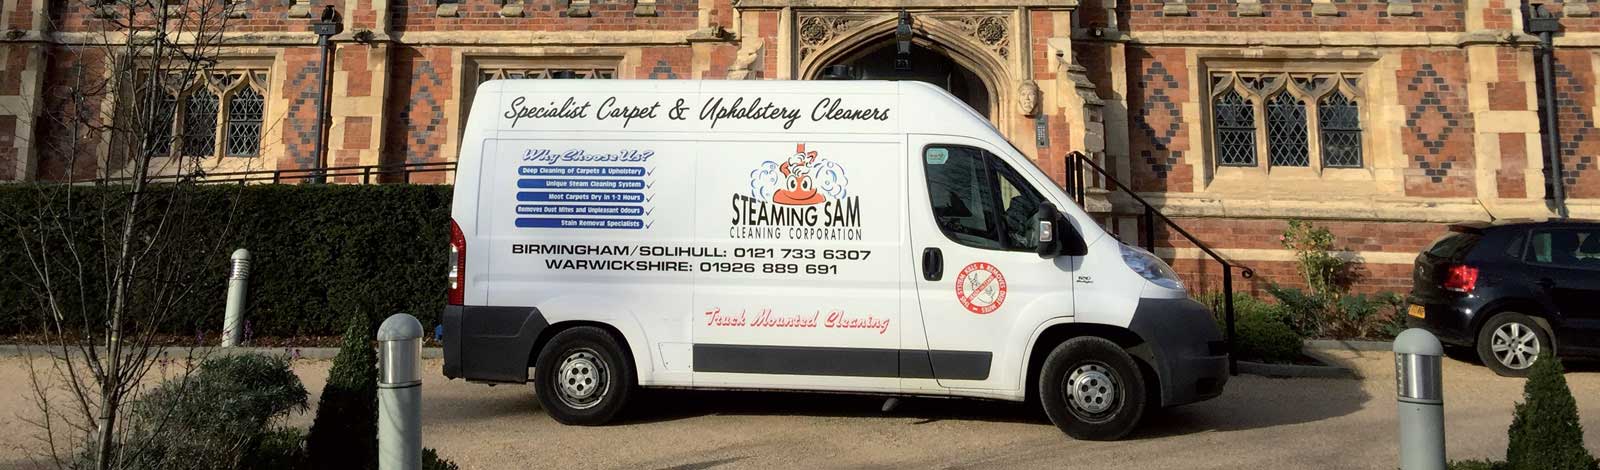 Steaming Sam Cleaning Service Van